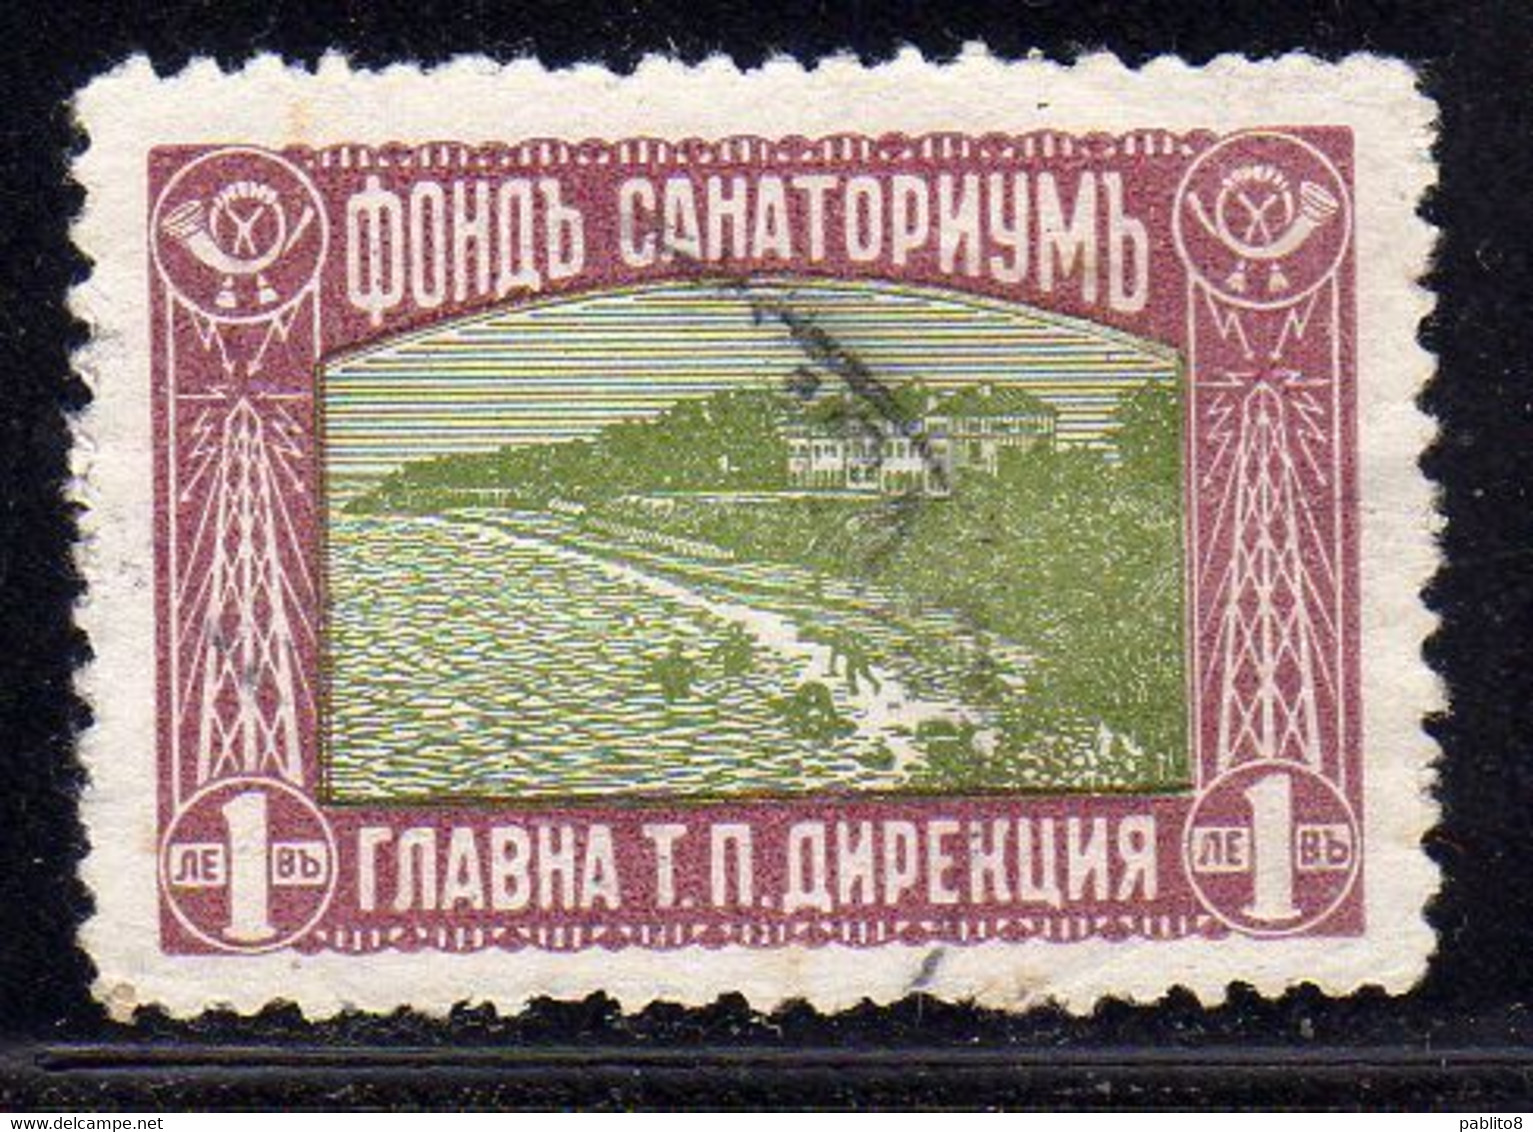 BULGARIA BULGARIE BULGARIEN 1930 1933 POSTAL TAX STAMPS ST CONSTANTINE SANATORIUM 1L USED USATO OBLITERE' - Timbres-taxe